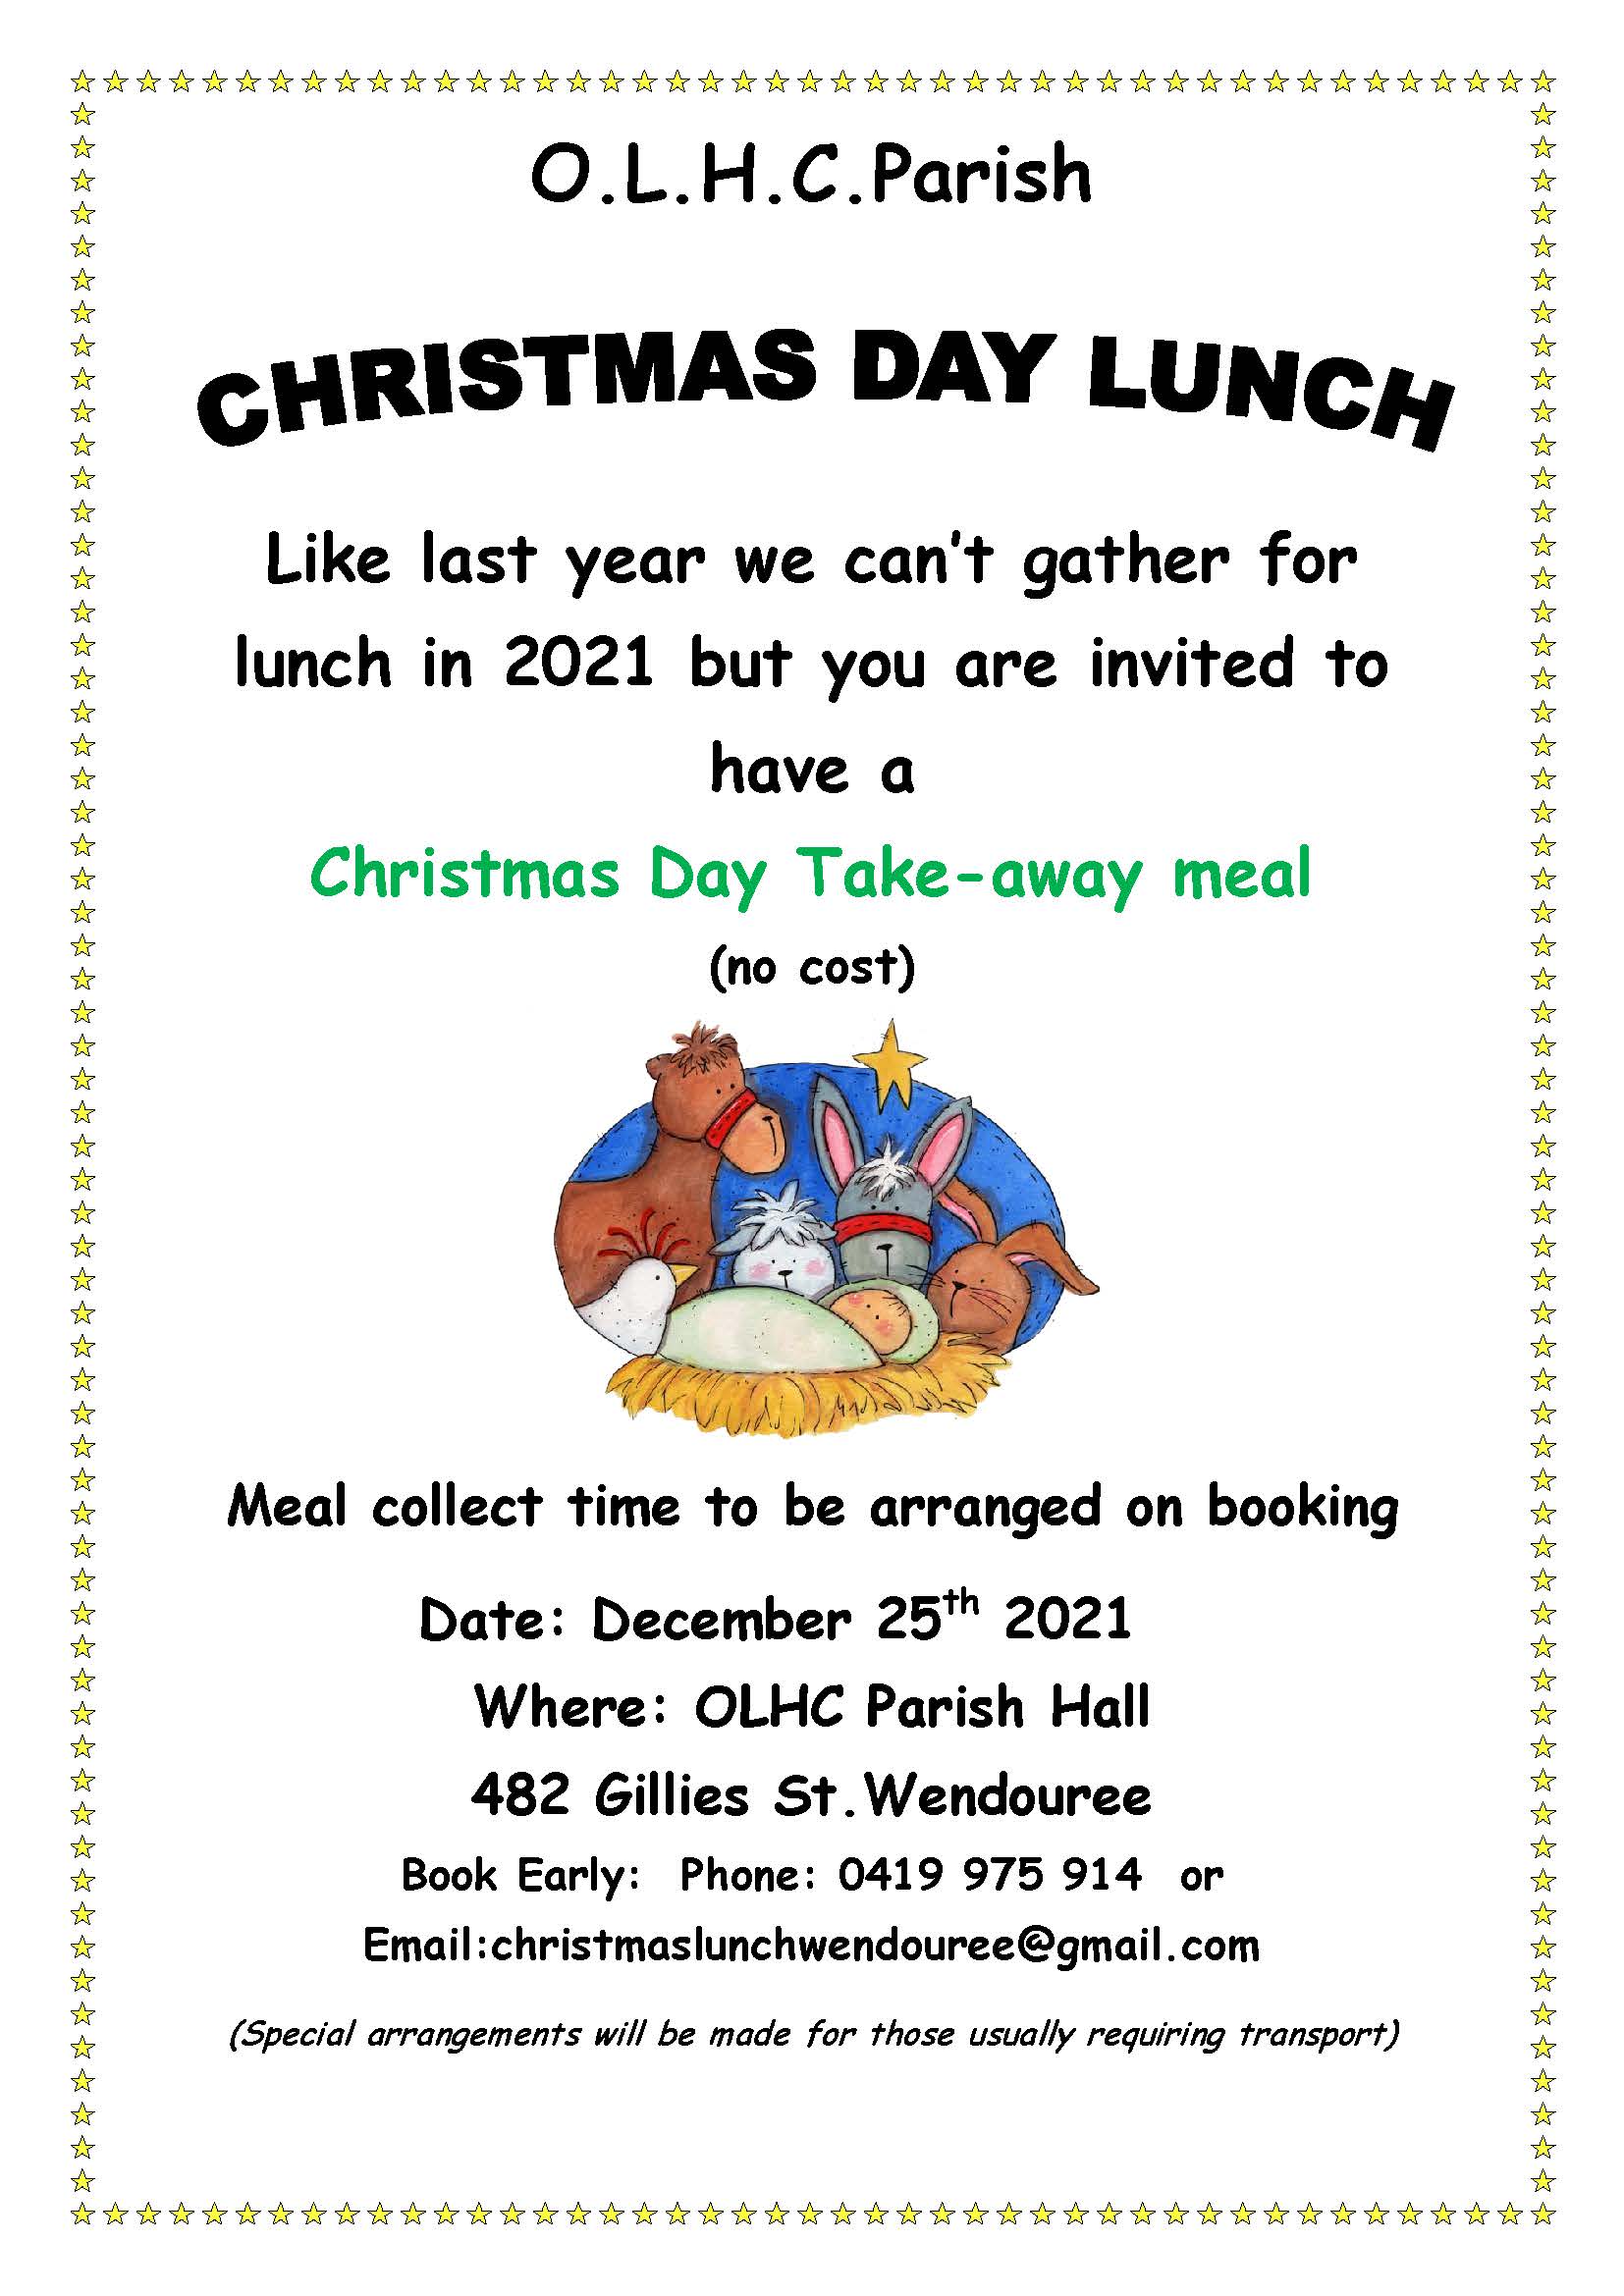 OLHC Parish Wendouree Christmas Day Lunch Diocese of Ballarat